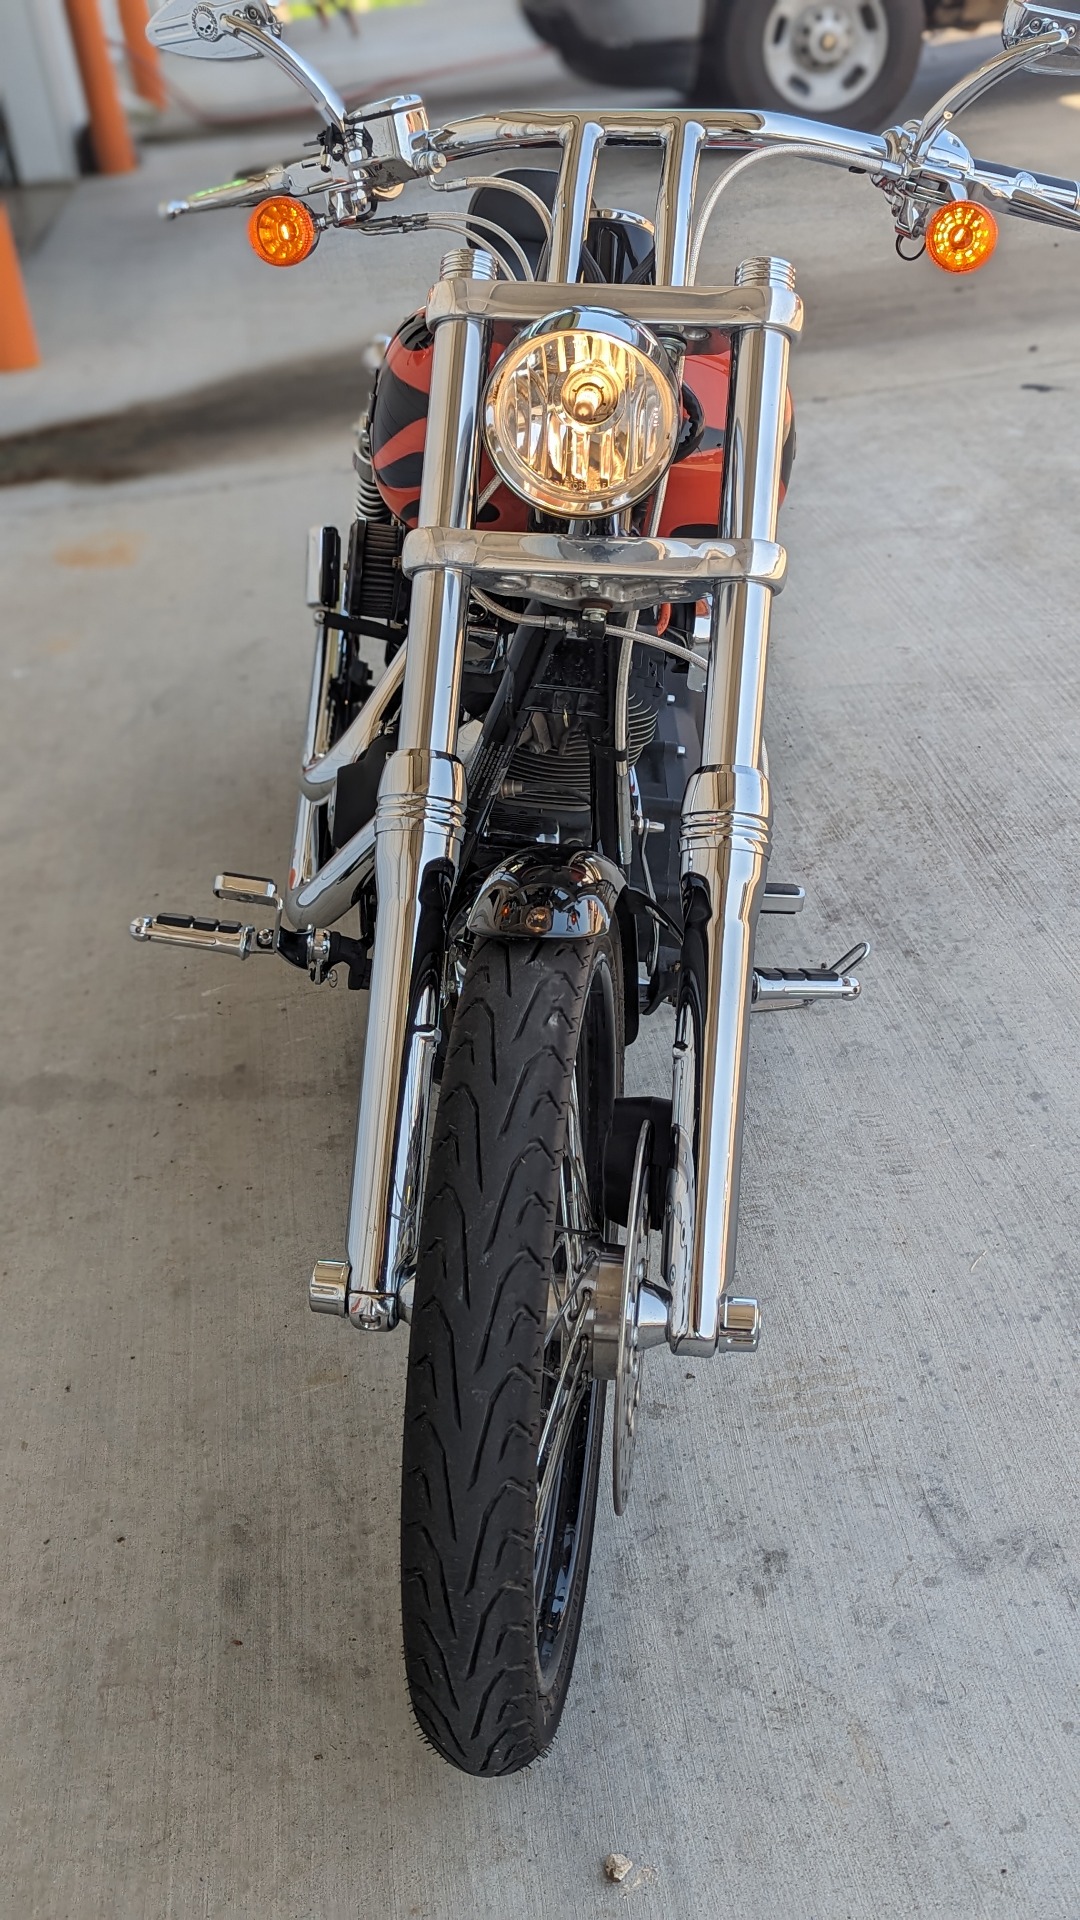 2010 Harley davidson dyna wide for sale in little rock - Photo 9